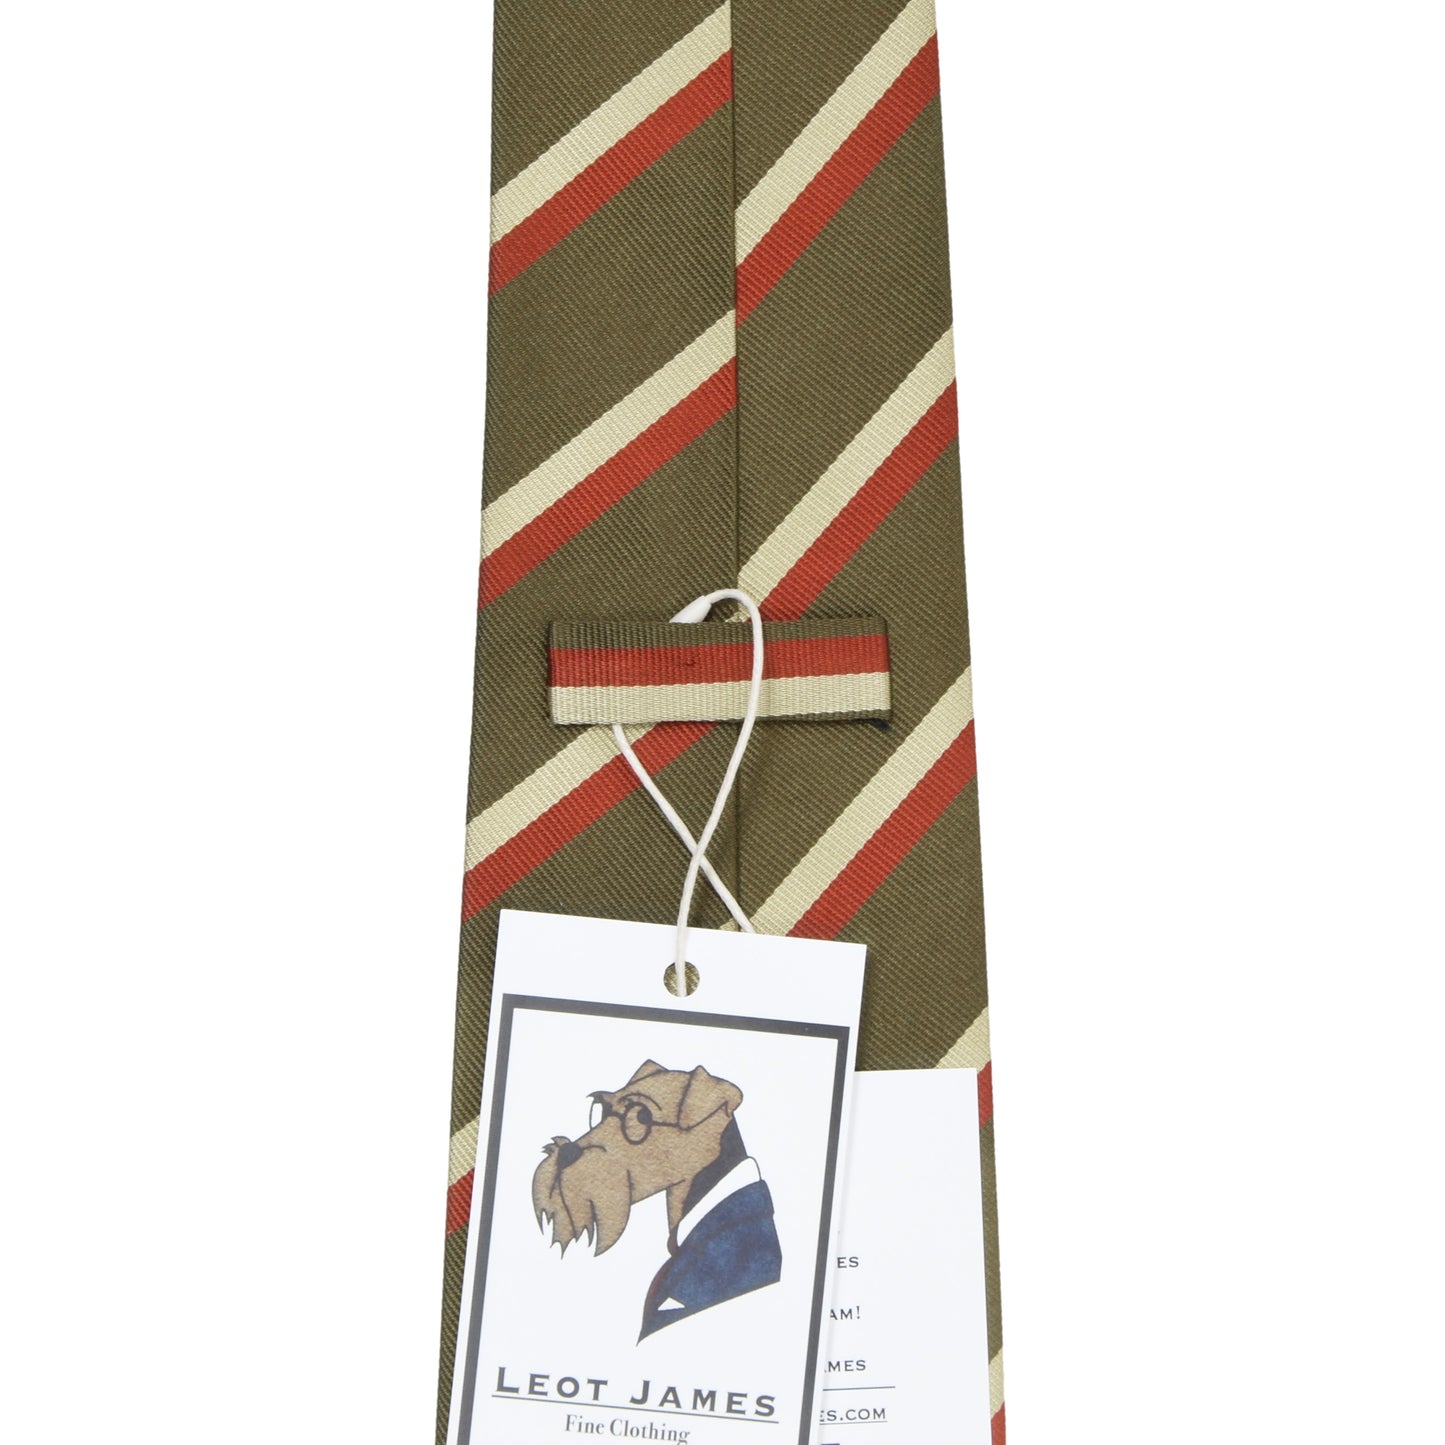 Chester Barrie 100% Silk Repp Stripe Tie ca. 143cm/9cm - Olive/Beige/Orange